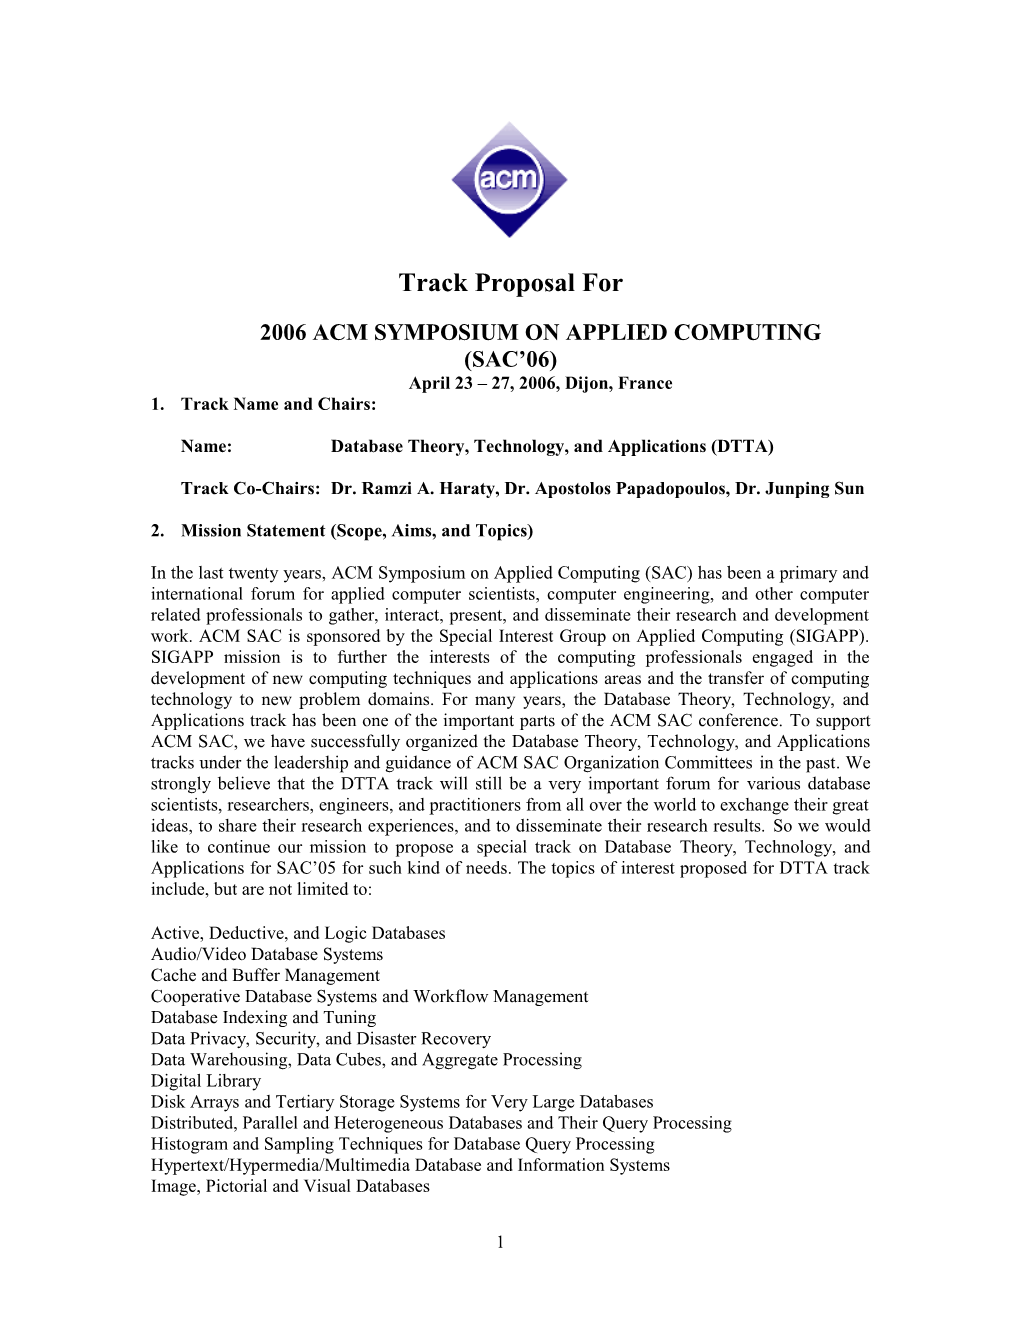 2006 Acm Symposium on Applied Computing (Sac 06)